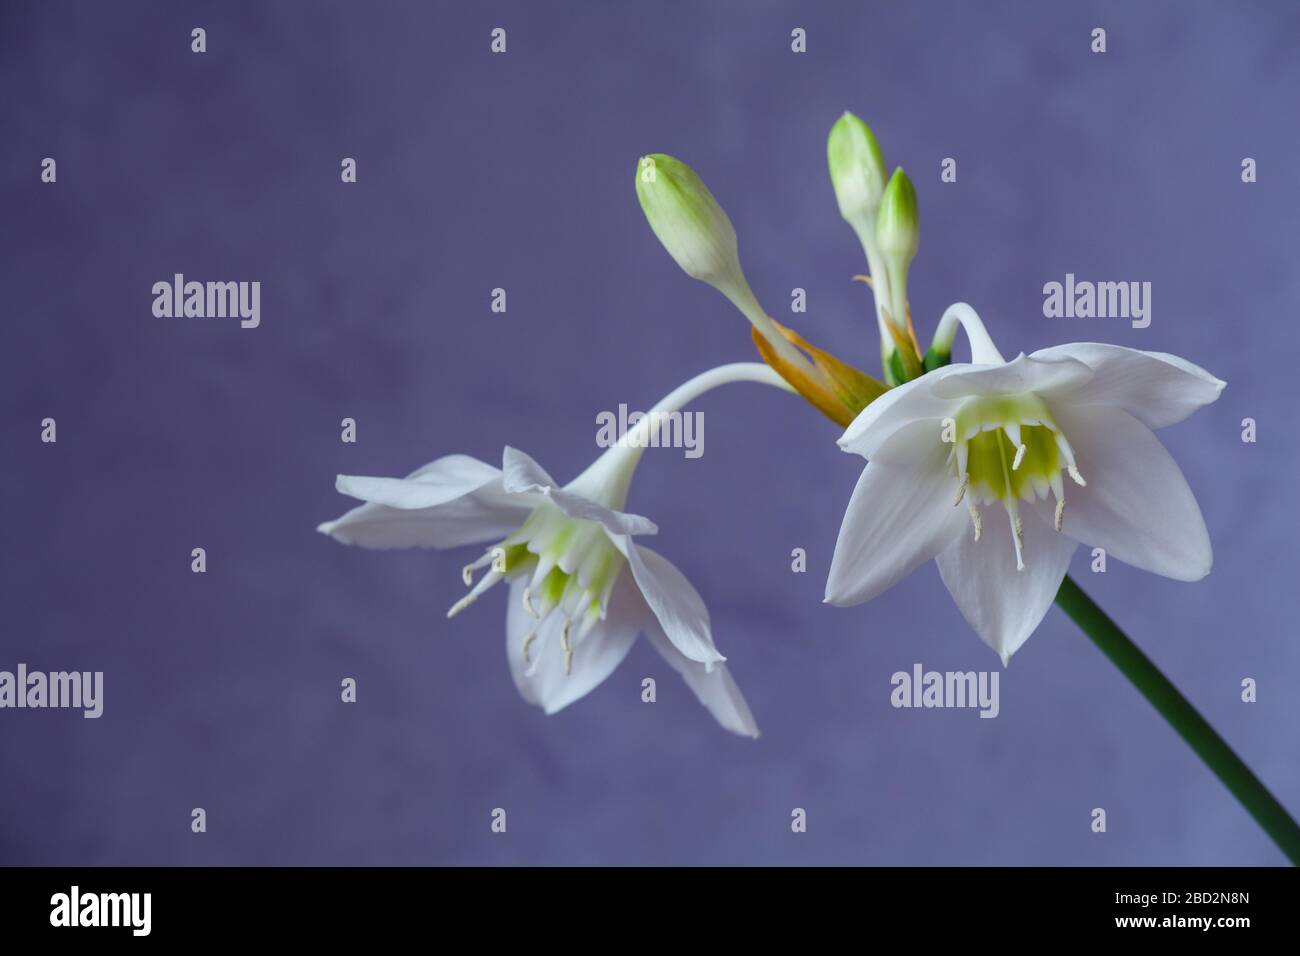 Beautiful Eucharis, the English name Amazon lily, flower close up against blue background. Stock Photo